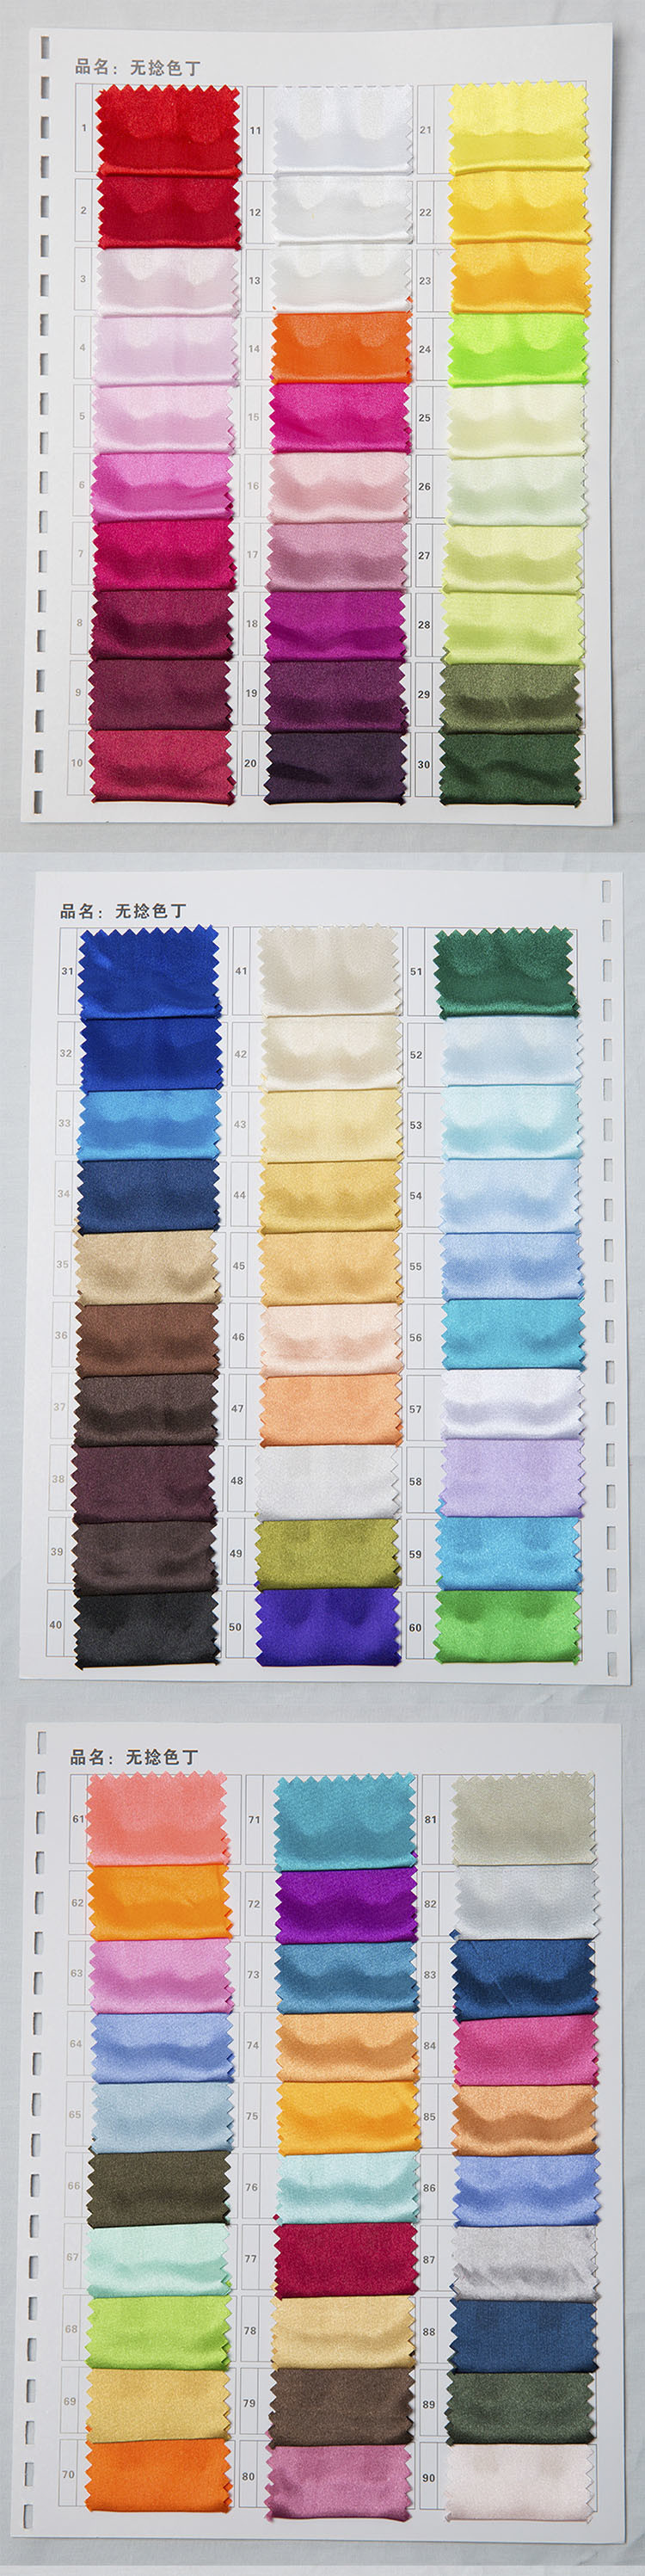 100% Polyester Crepe Silk Fabric Chiffon Fabric for Dresses